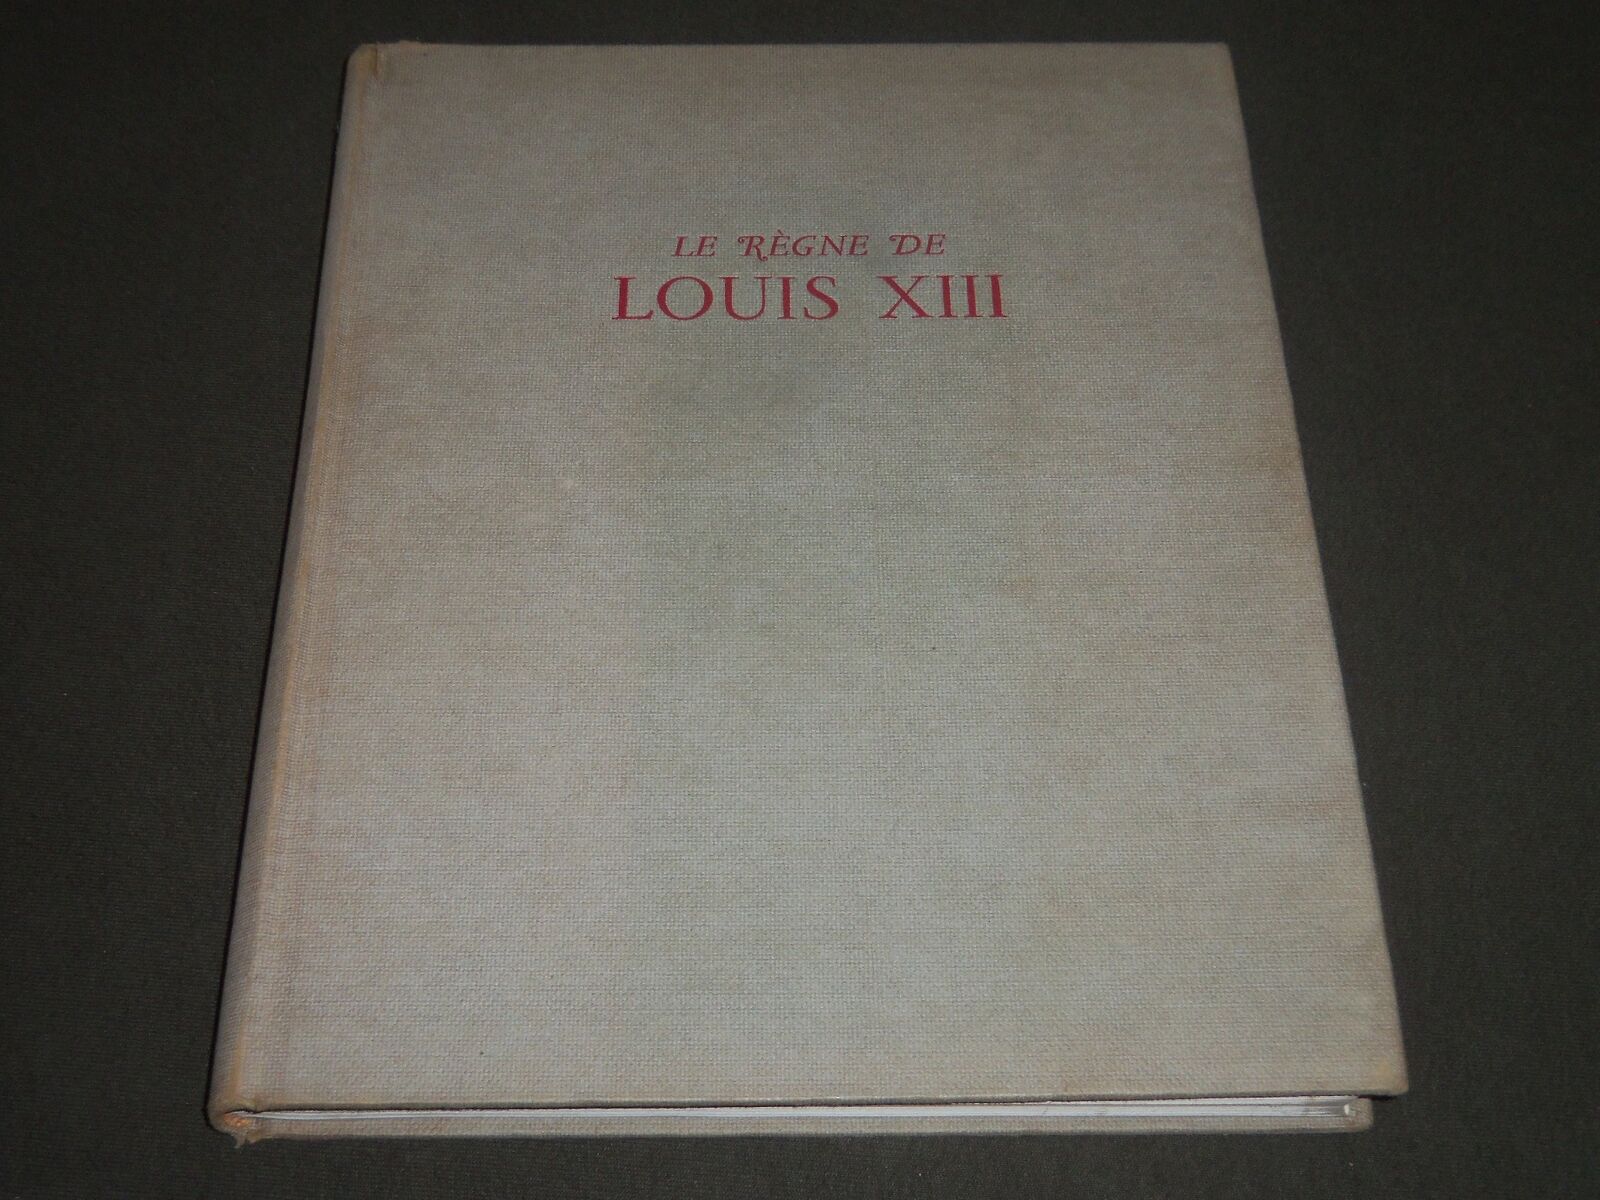 1949 LE REGNE DE LOUIS XIII FRENCH BOOK - GREAT PRINTS - KD 4029